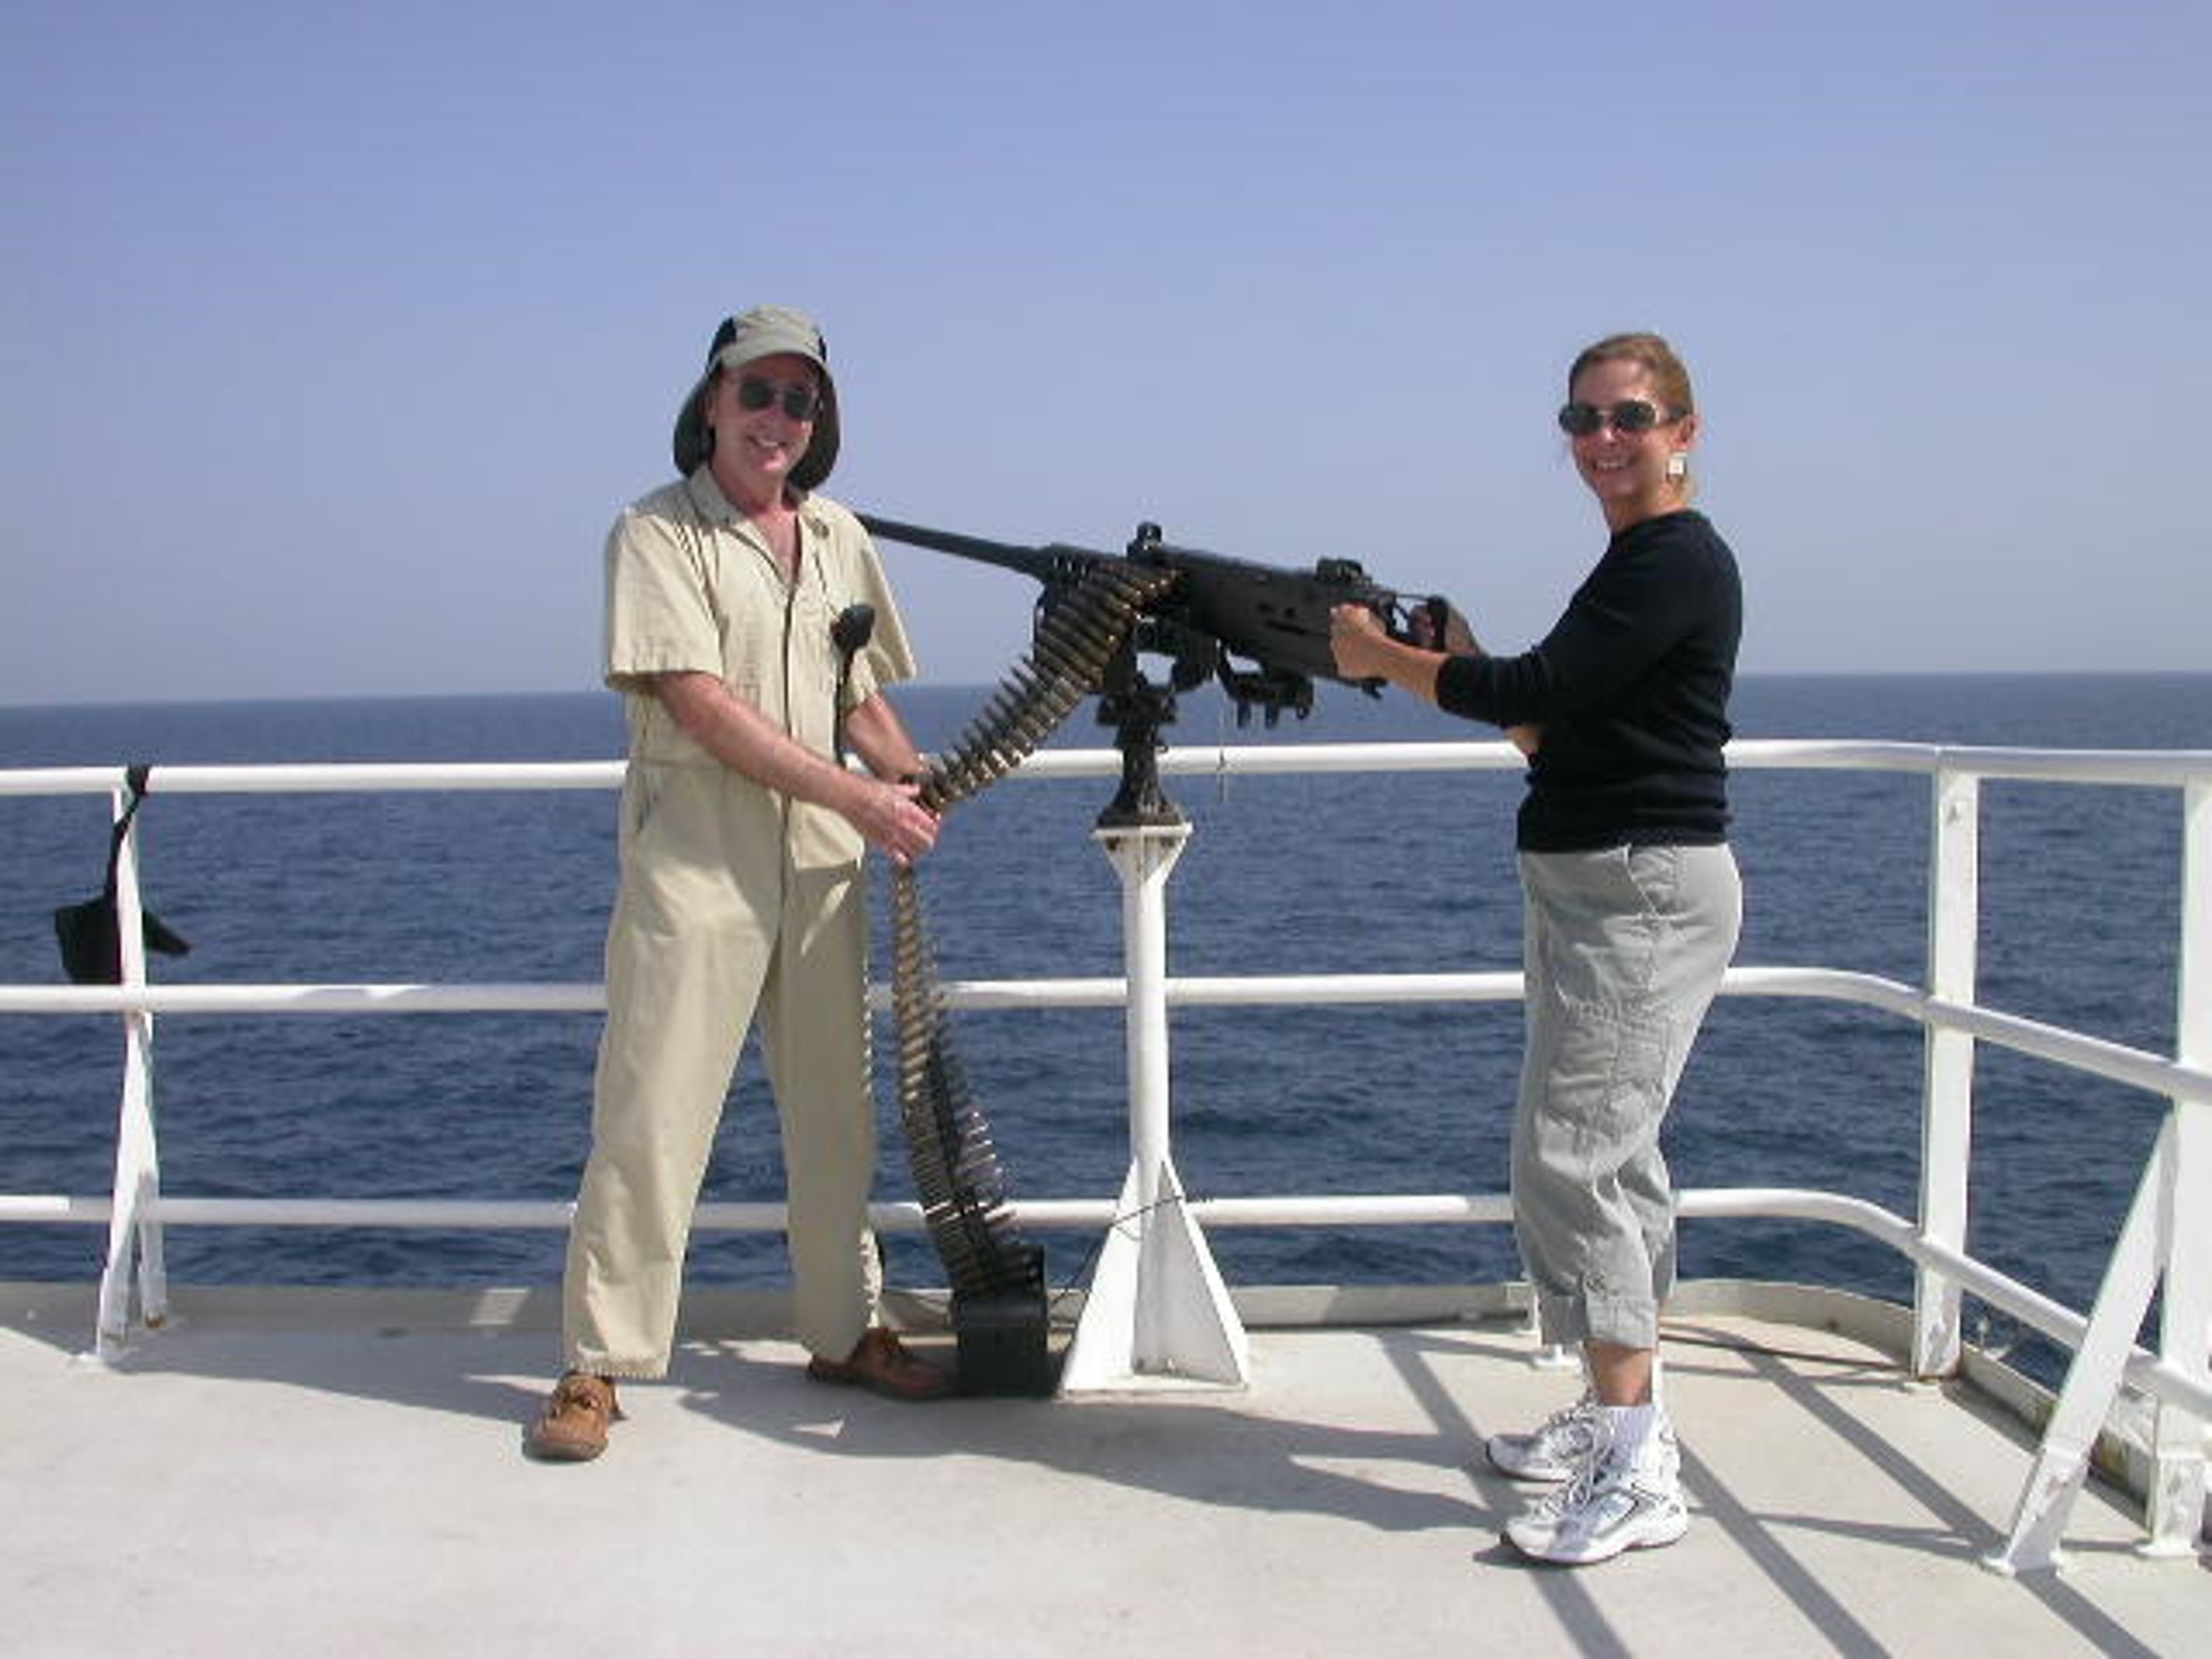 CAPT Andrew Petruska, USN Retired “Secret Adventures in Oceanography”